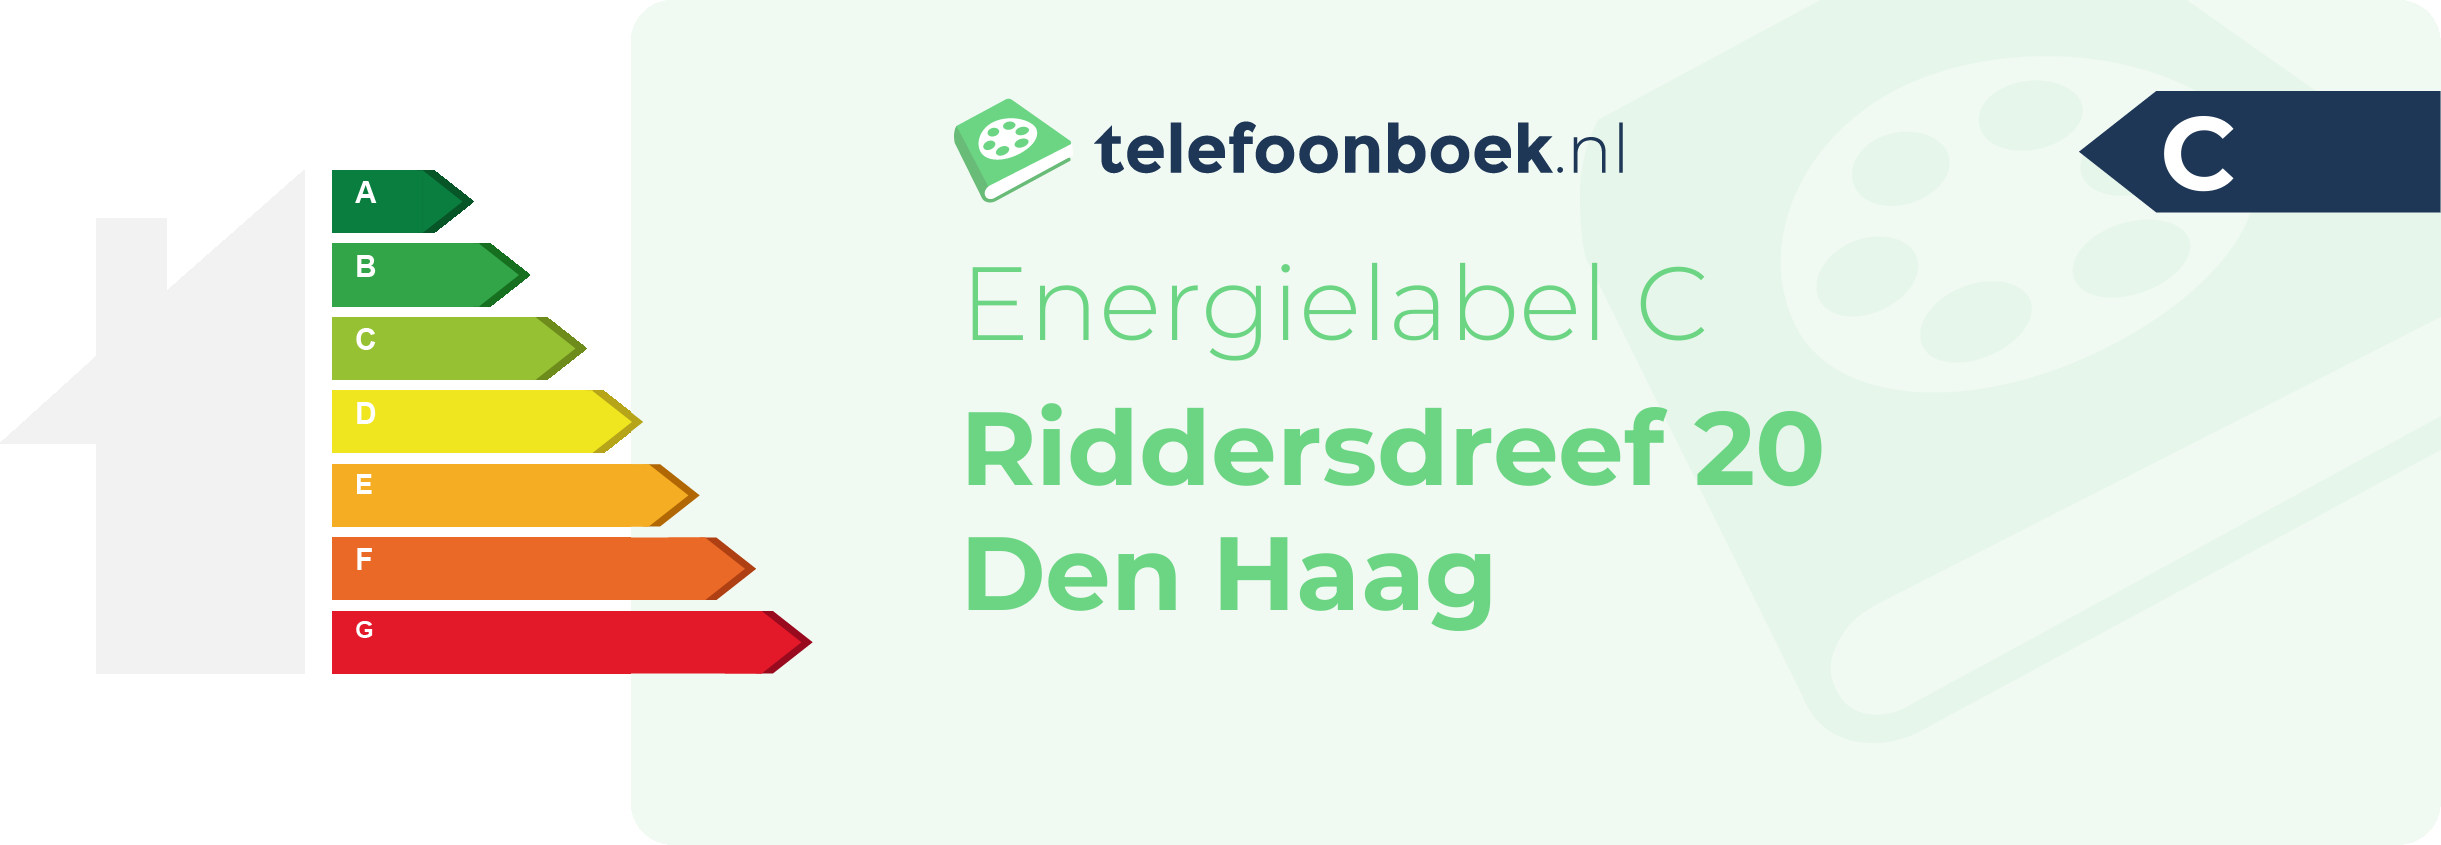 Energielabel Riddersdreef 20 Den Haag